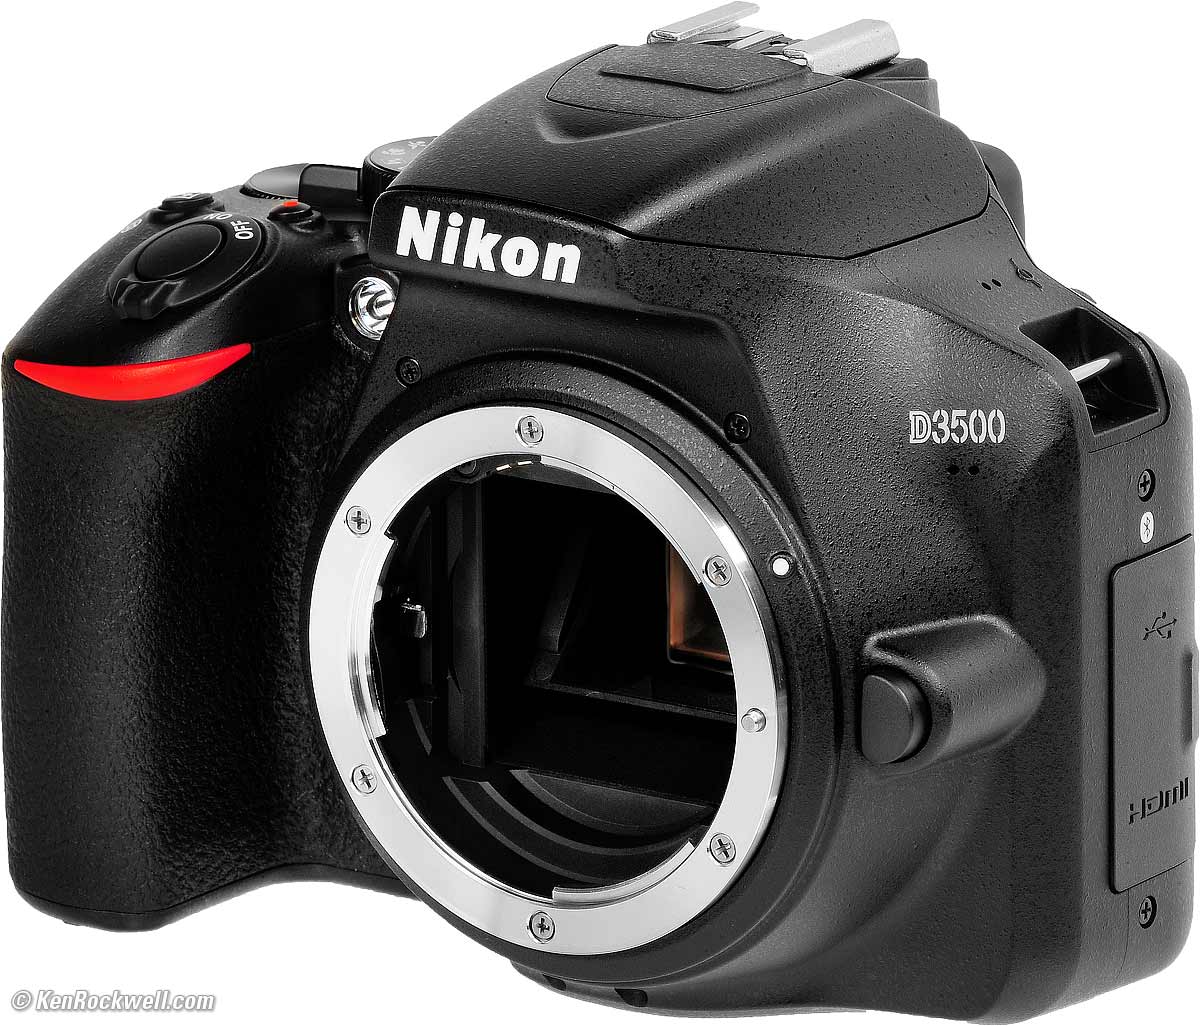 Nikon D3500 DSLR Camera Specifications